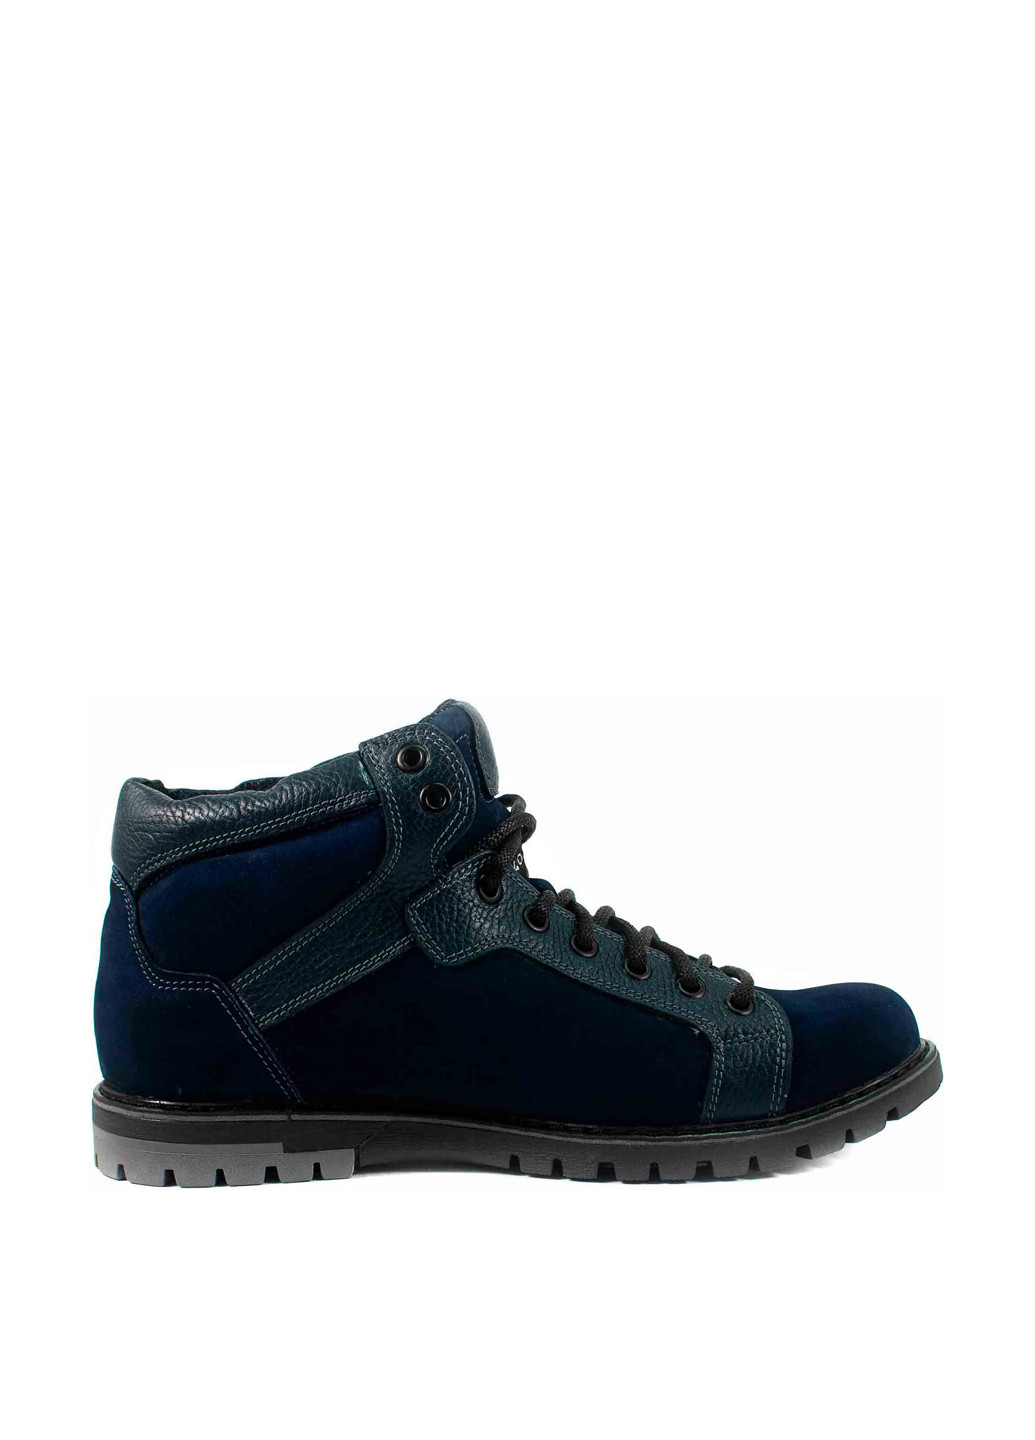 Синие зимние ботинки Mida